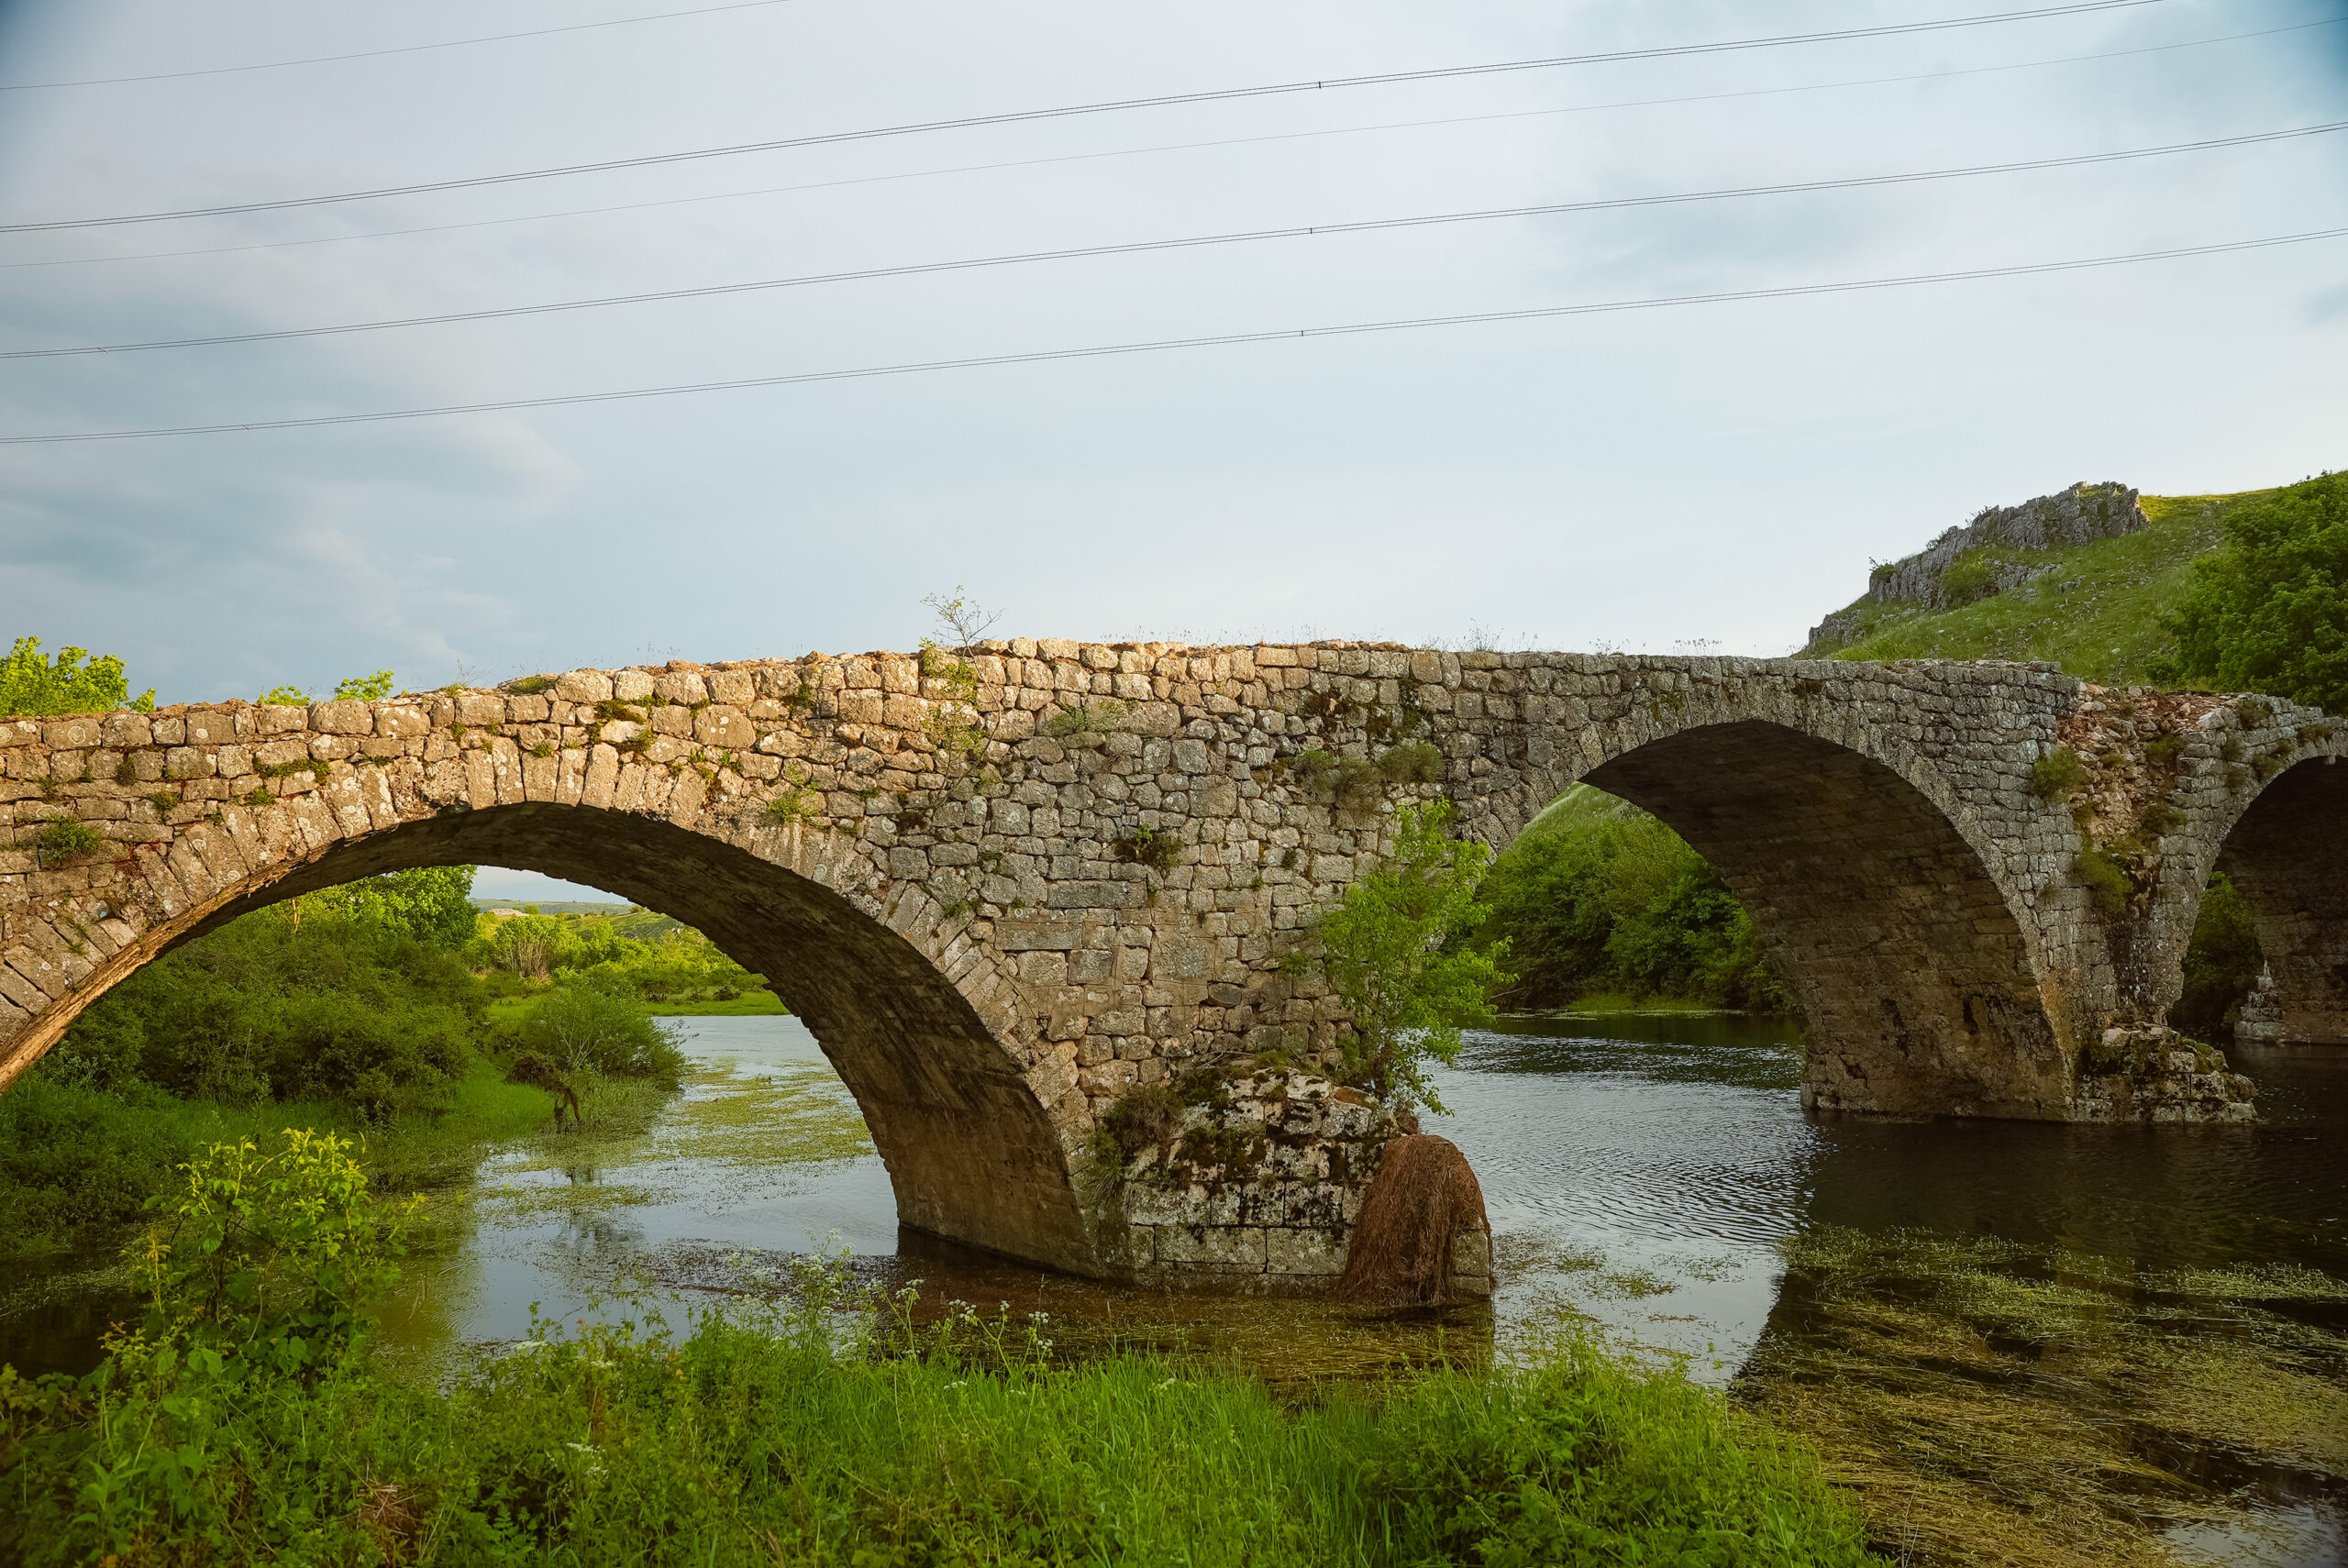 Village Bratac_Ovčiji brod stone arch bridge